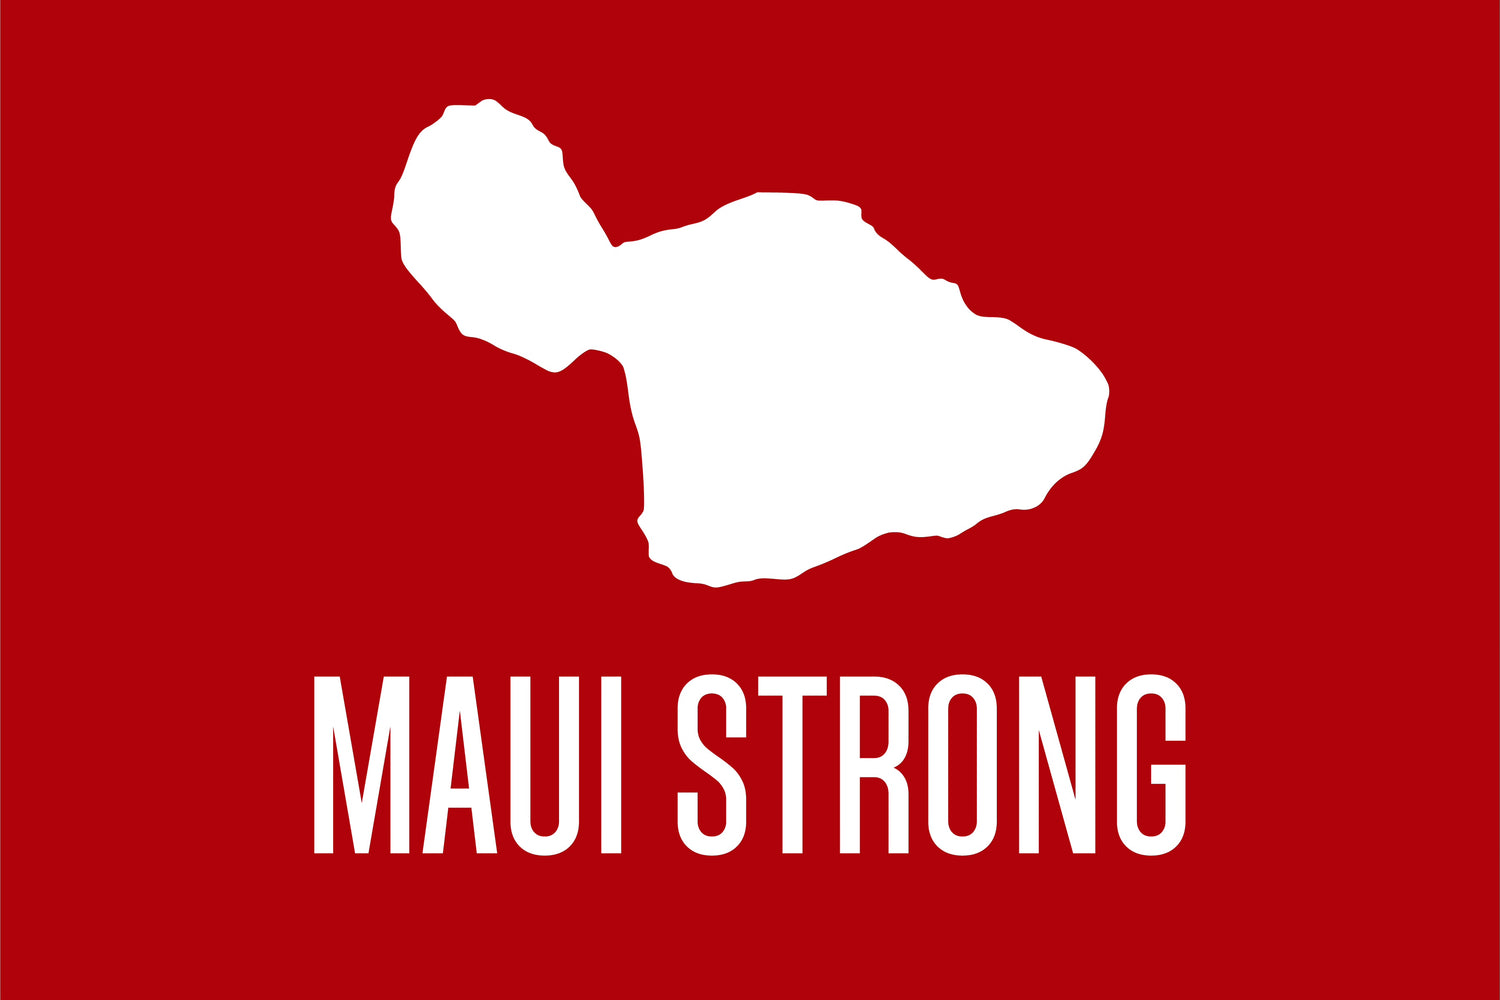 New Maui strong fish flag